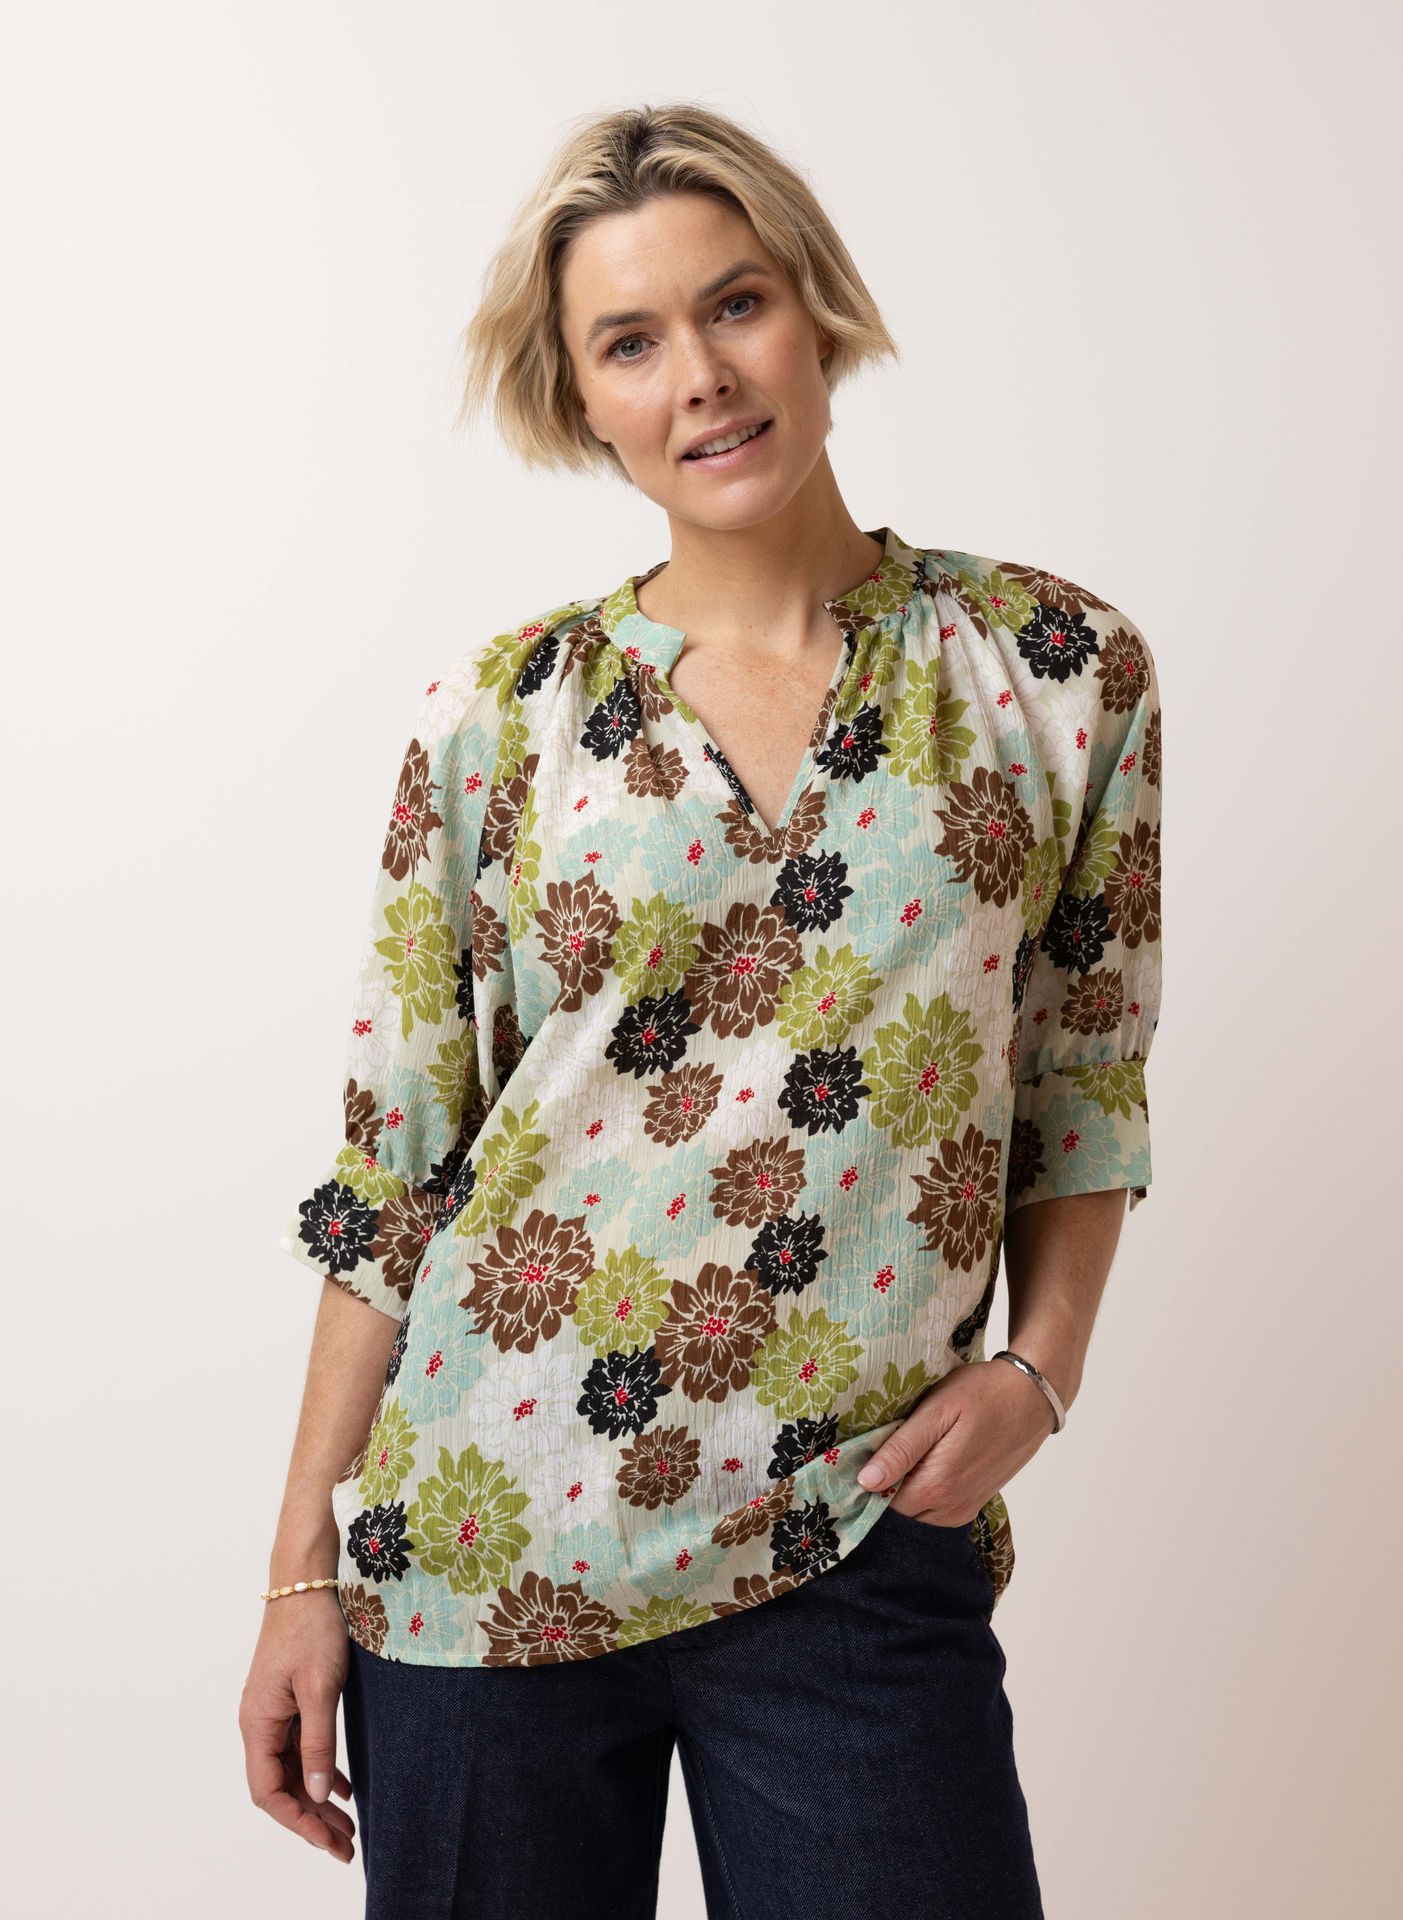 Norah Meerkleurige blouse multicolor 214956-002